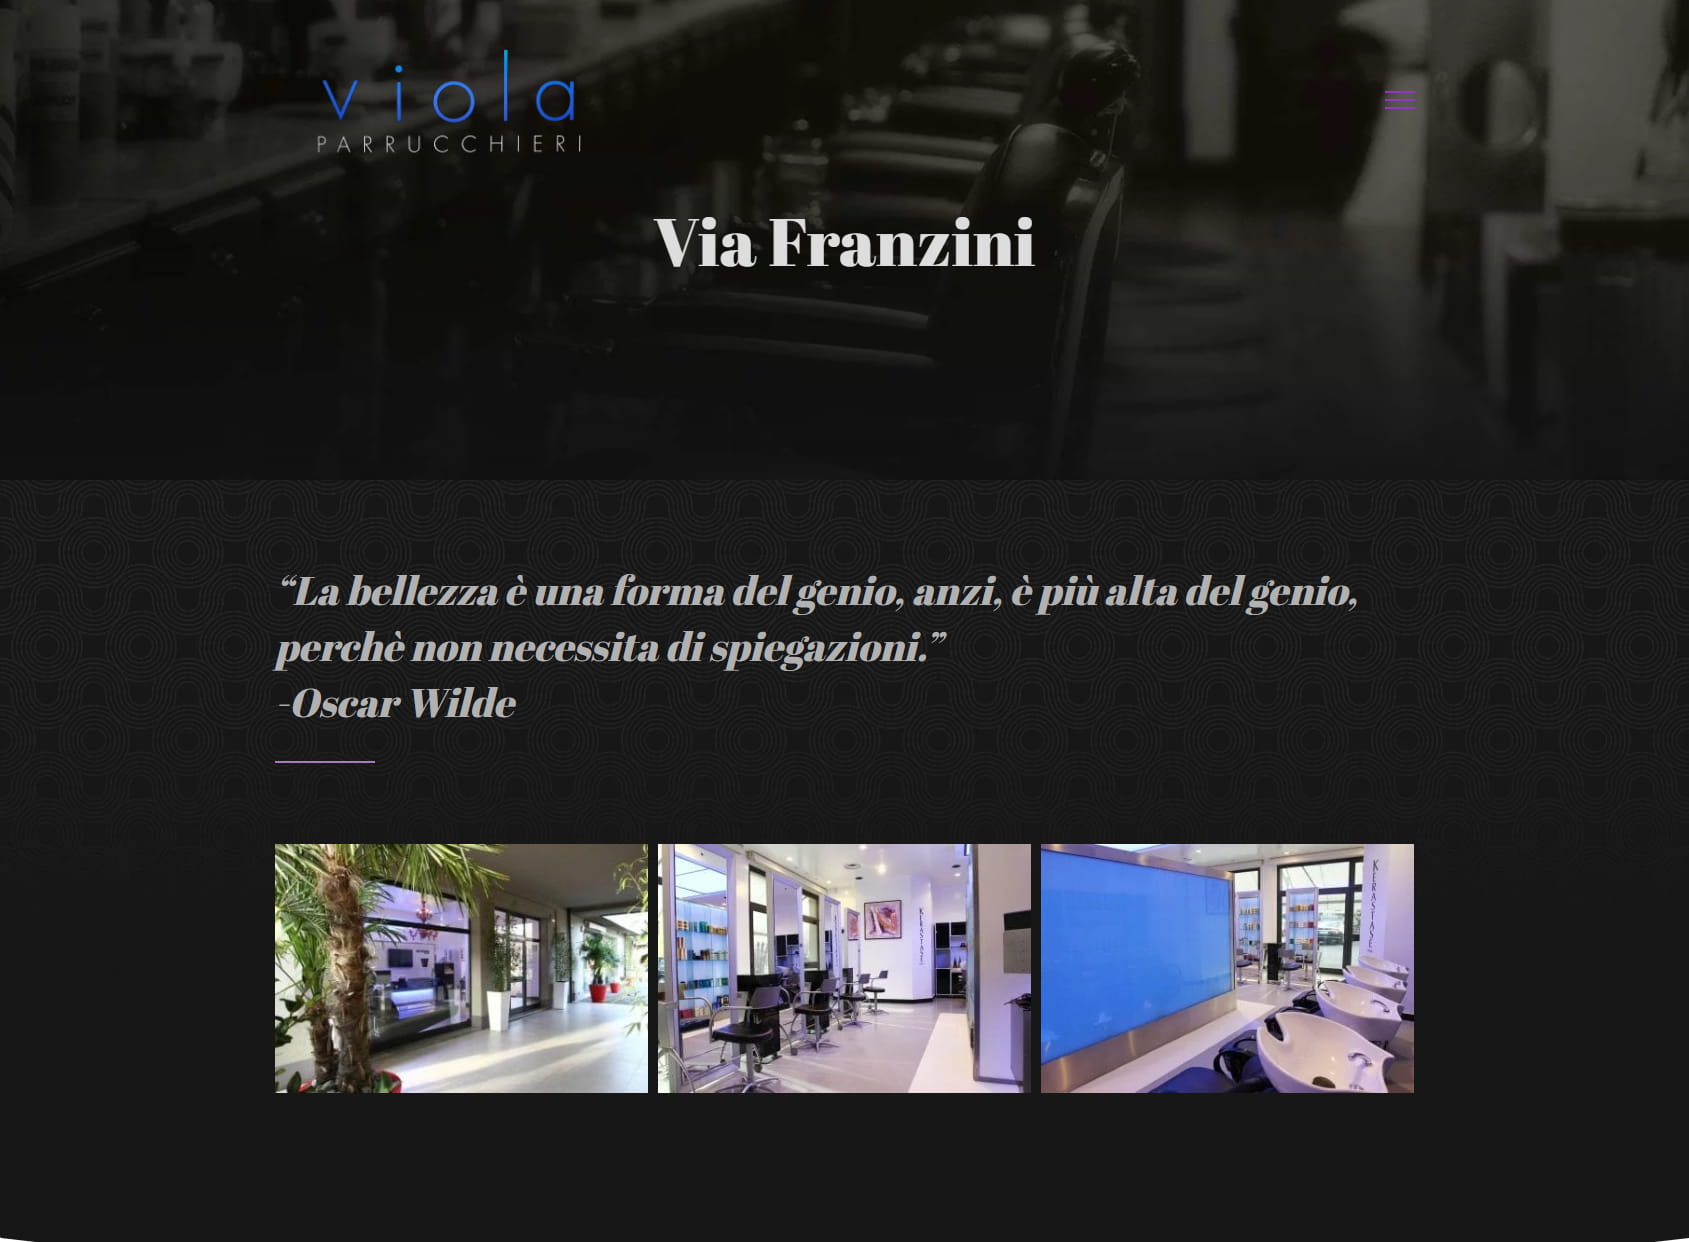 Viola Parrucchieri - Via Franzini